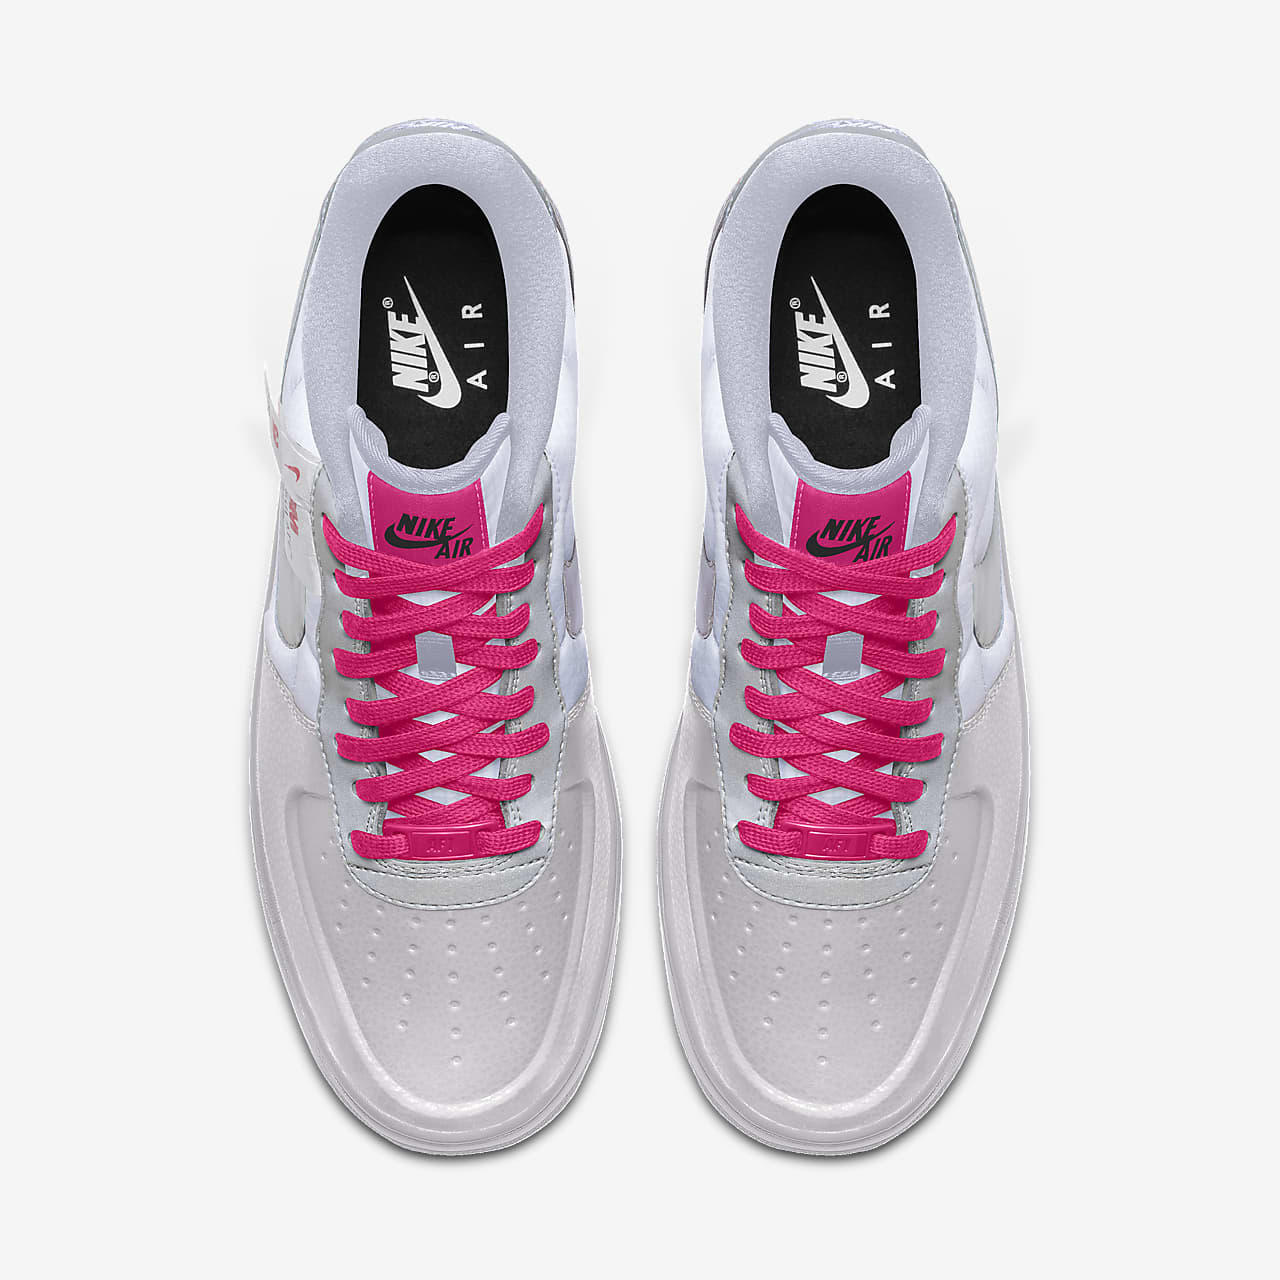 nike air force 1 tennis shoes